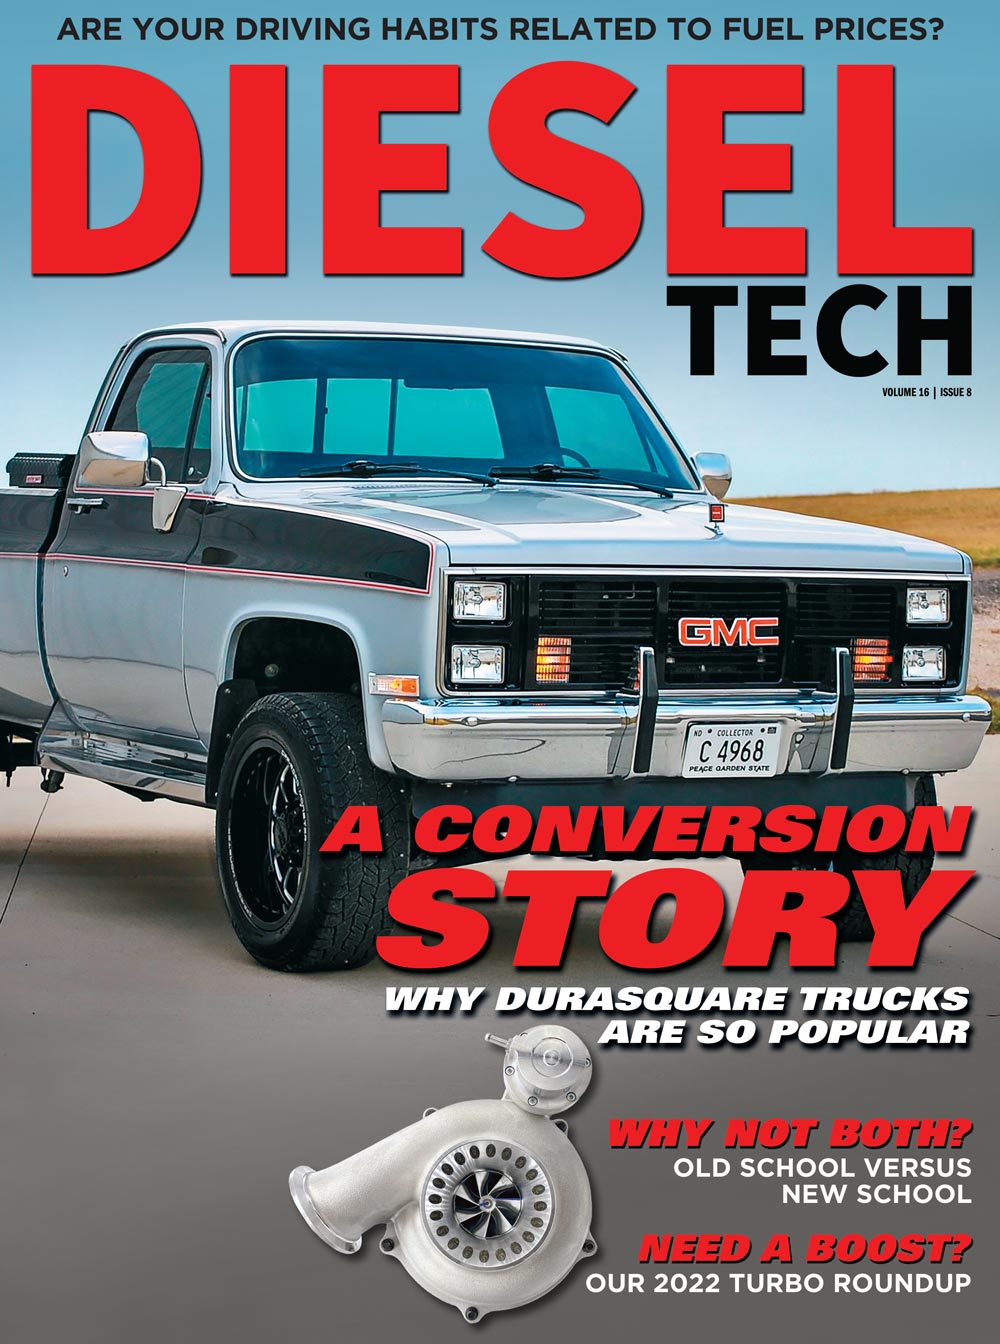 Diesel Tech October 2021 cover